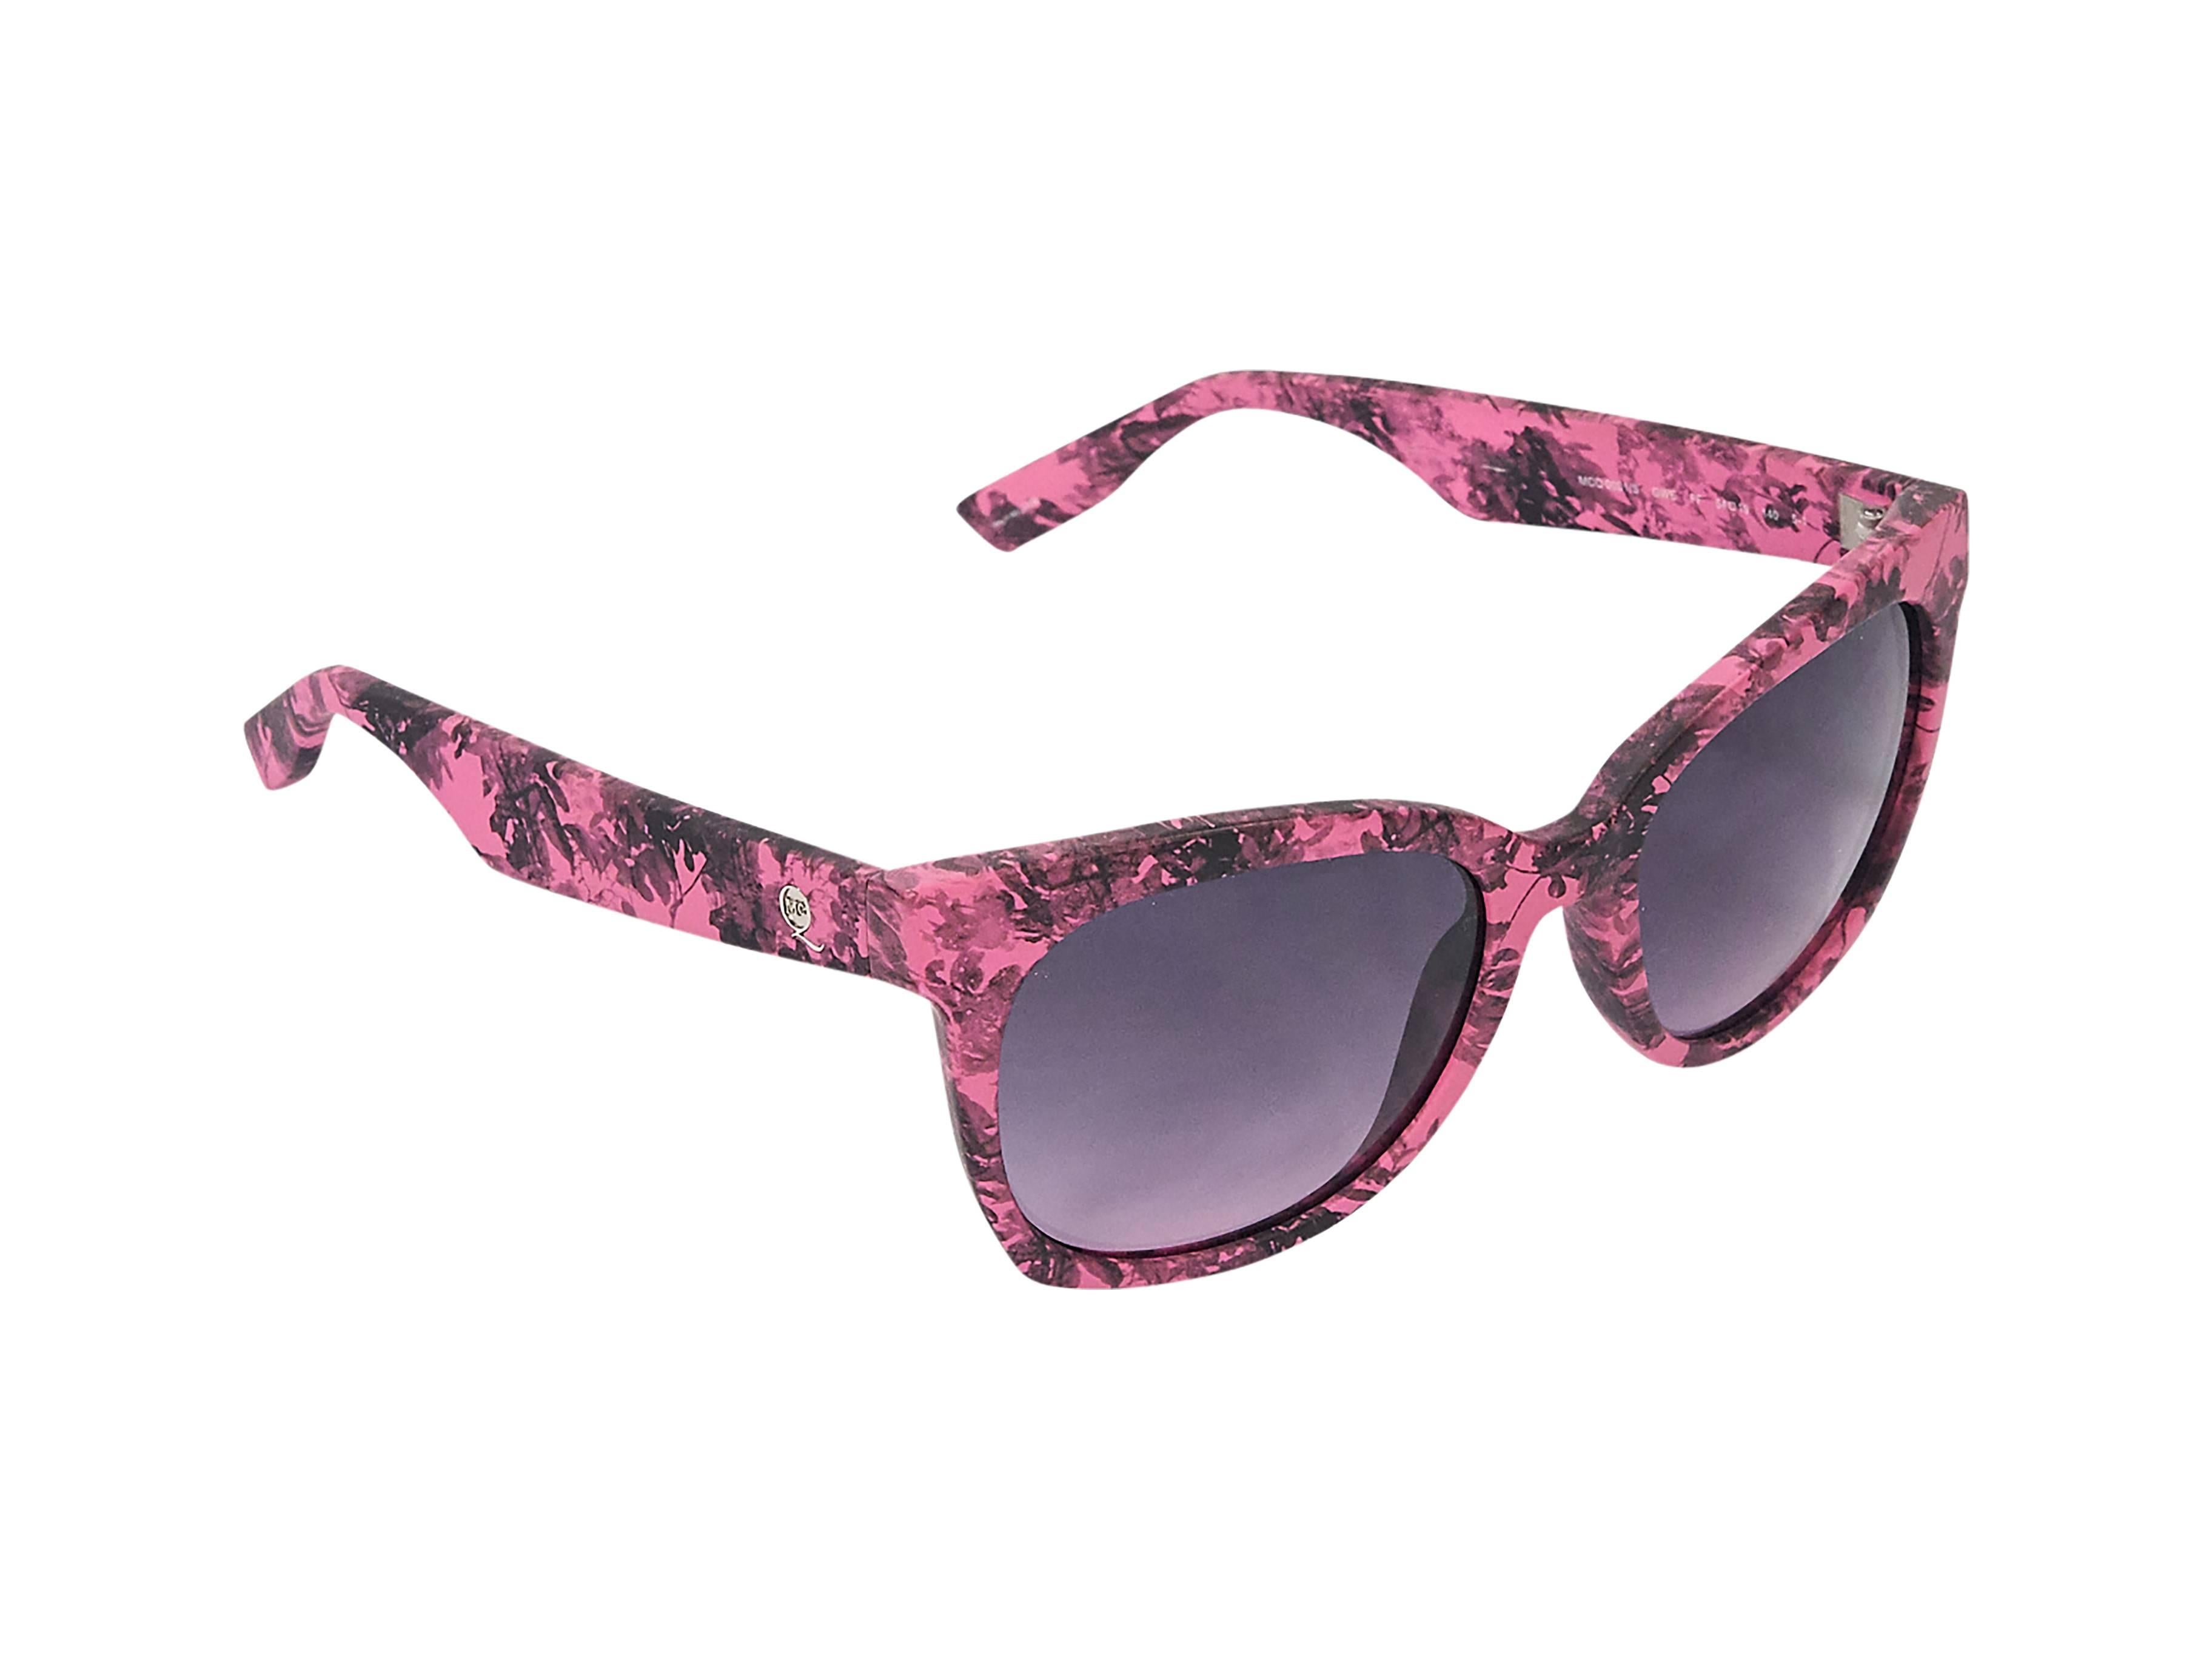 Product details: Matte pink and black floral printed sunglasses by Alexander McQueen. Gradient lenses. 
Condition: Excellent. 
Est. Retail $ 470.00